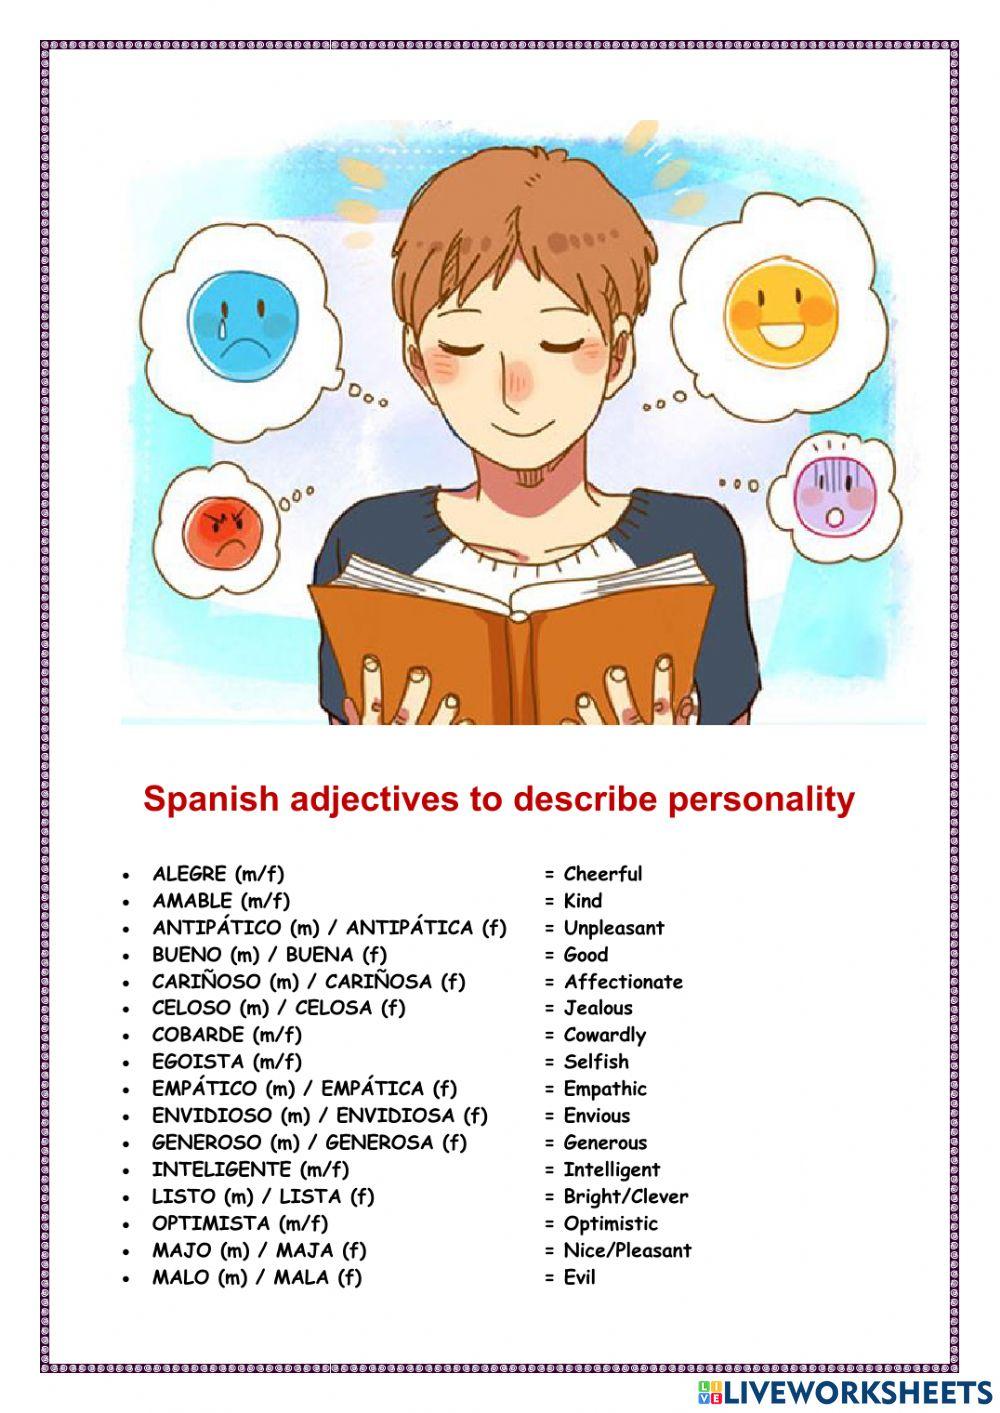 Adjetivos para describir personas